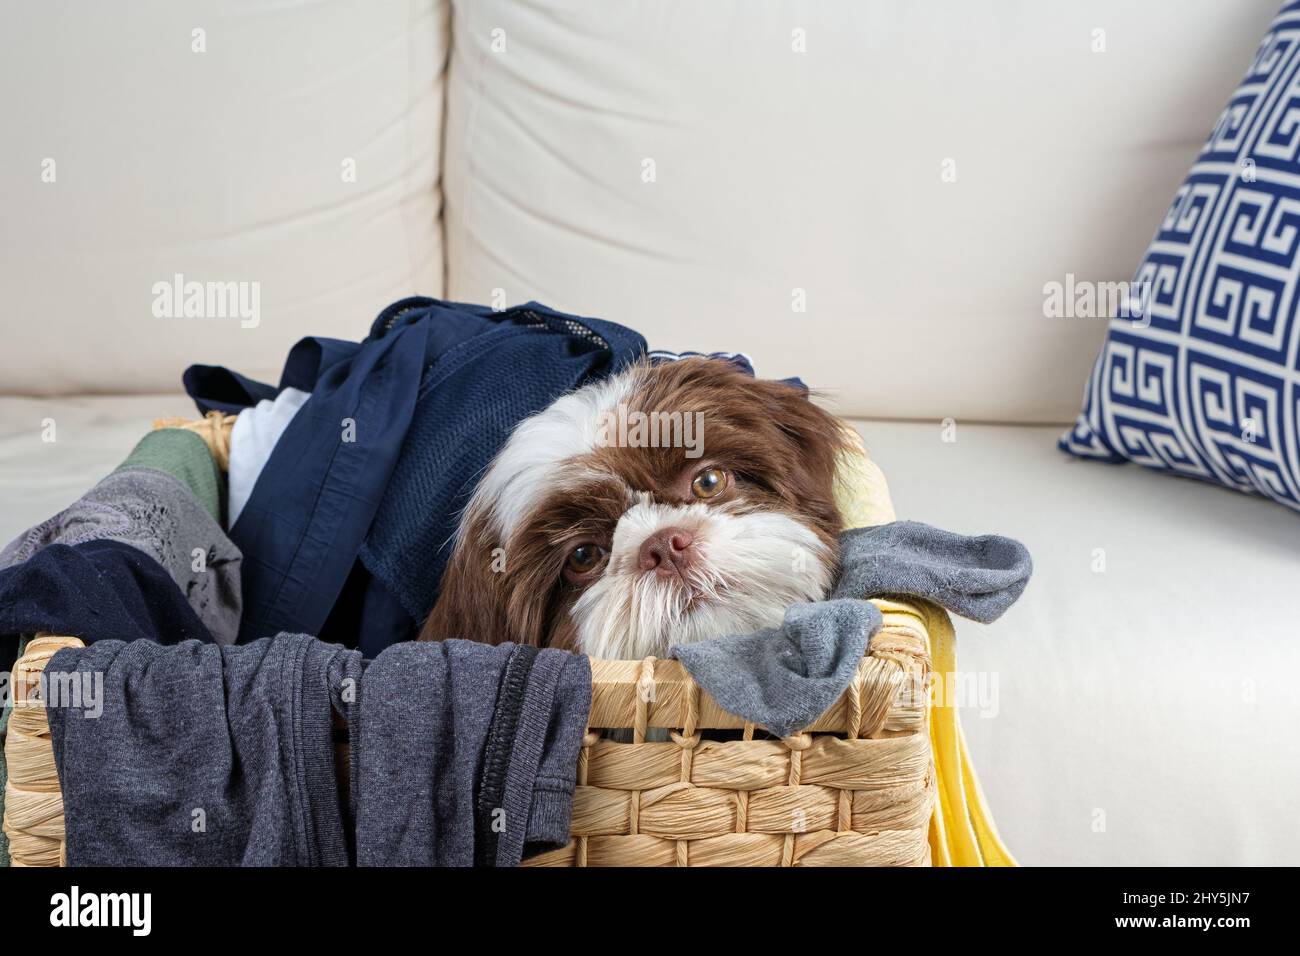 4 month old shih tzu puppy inside a laundry basket. Stock Photo